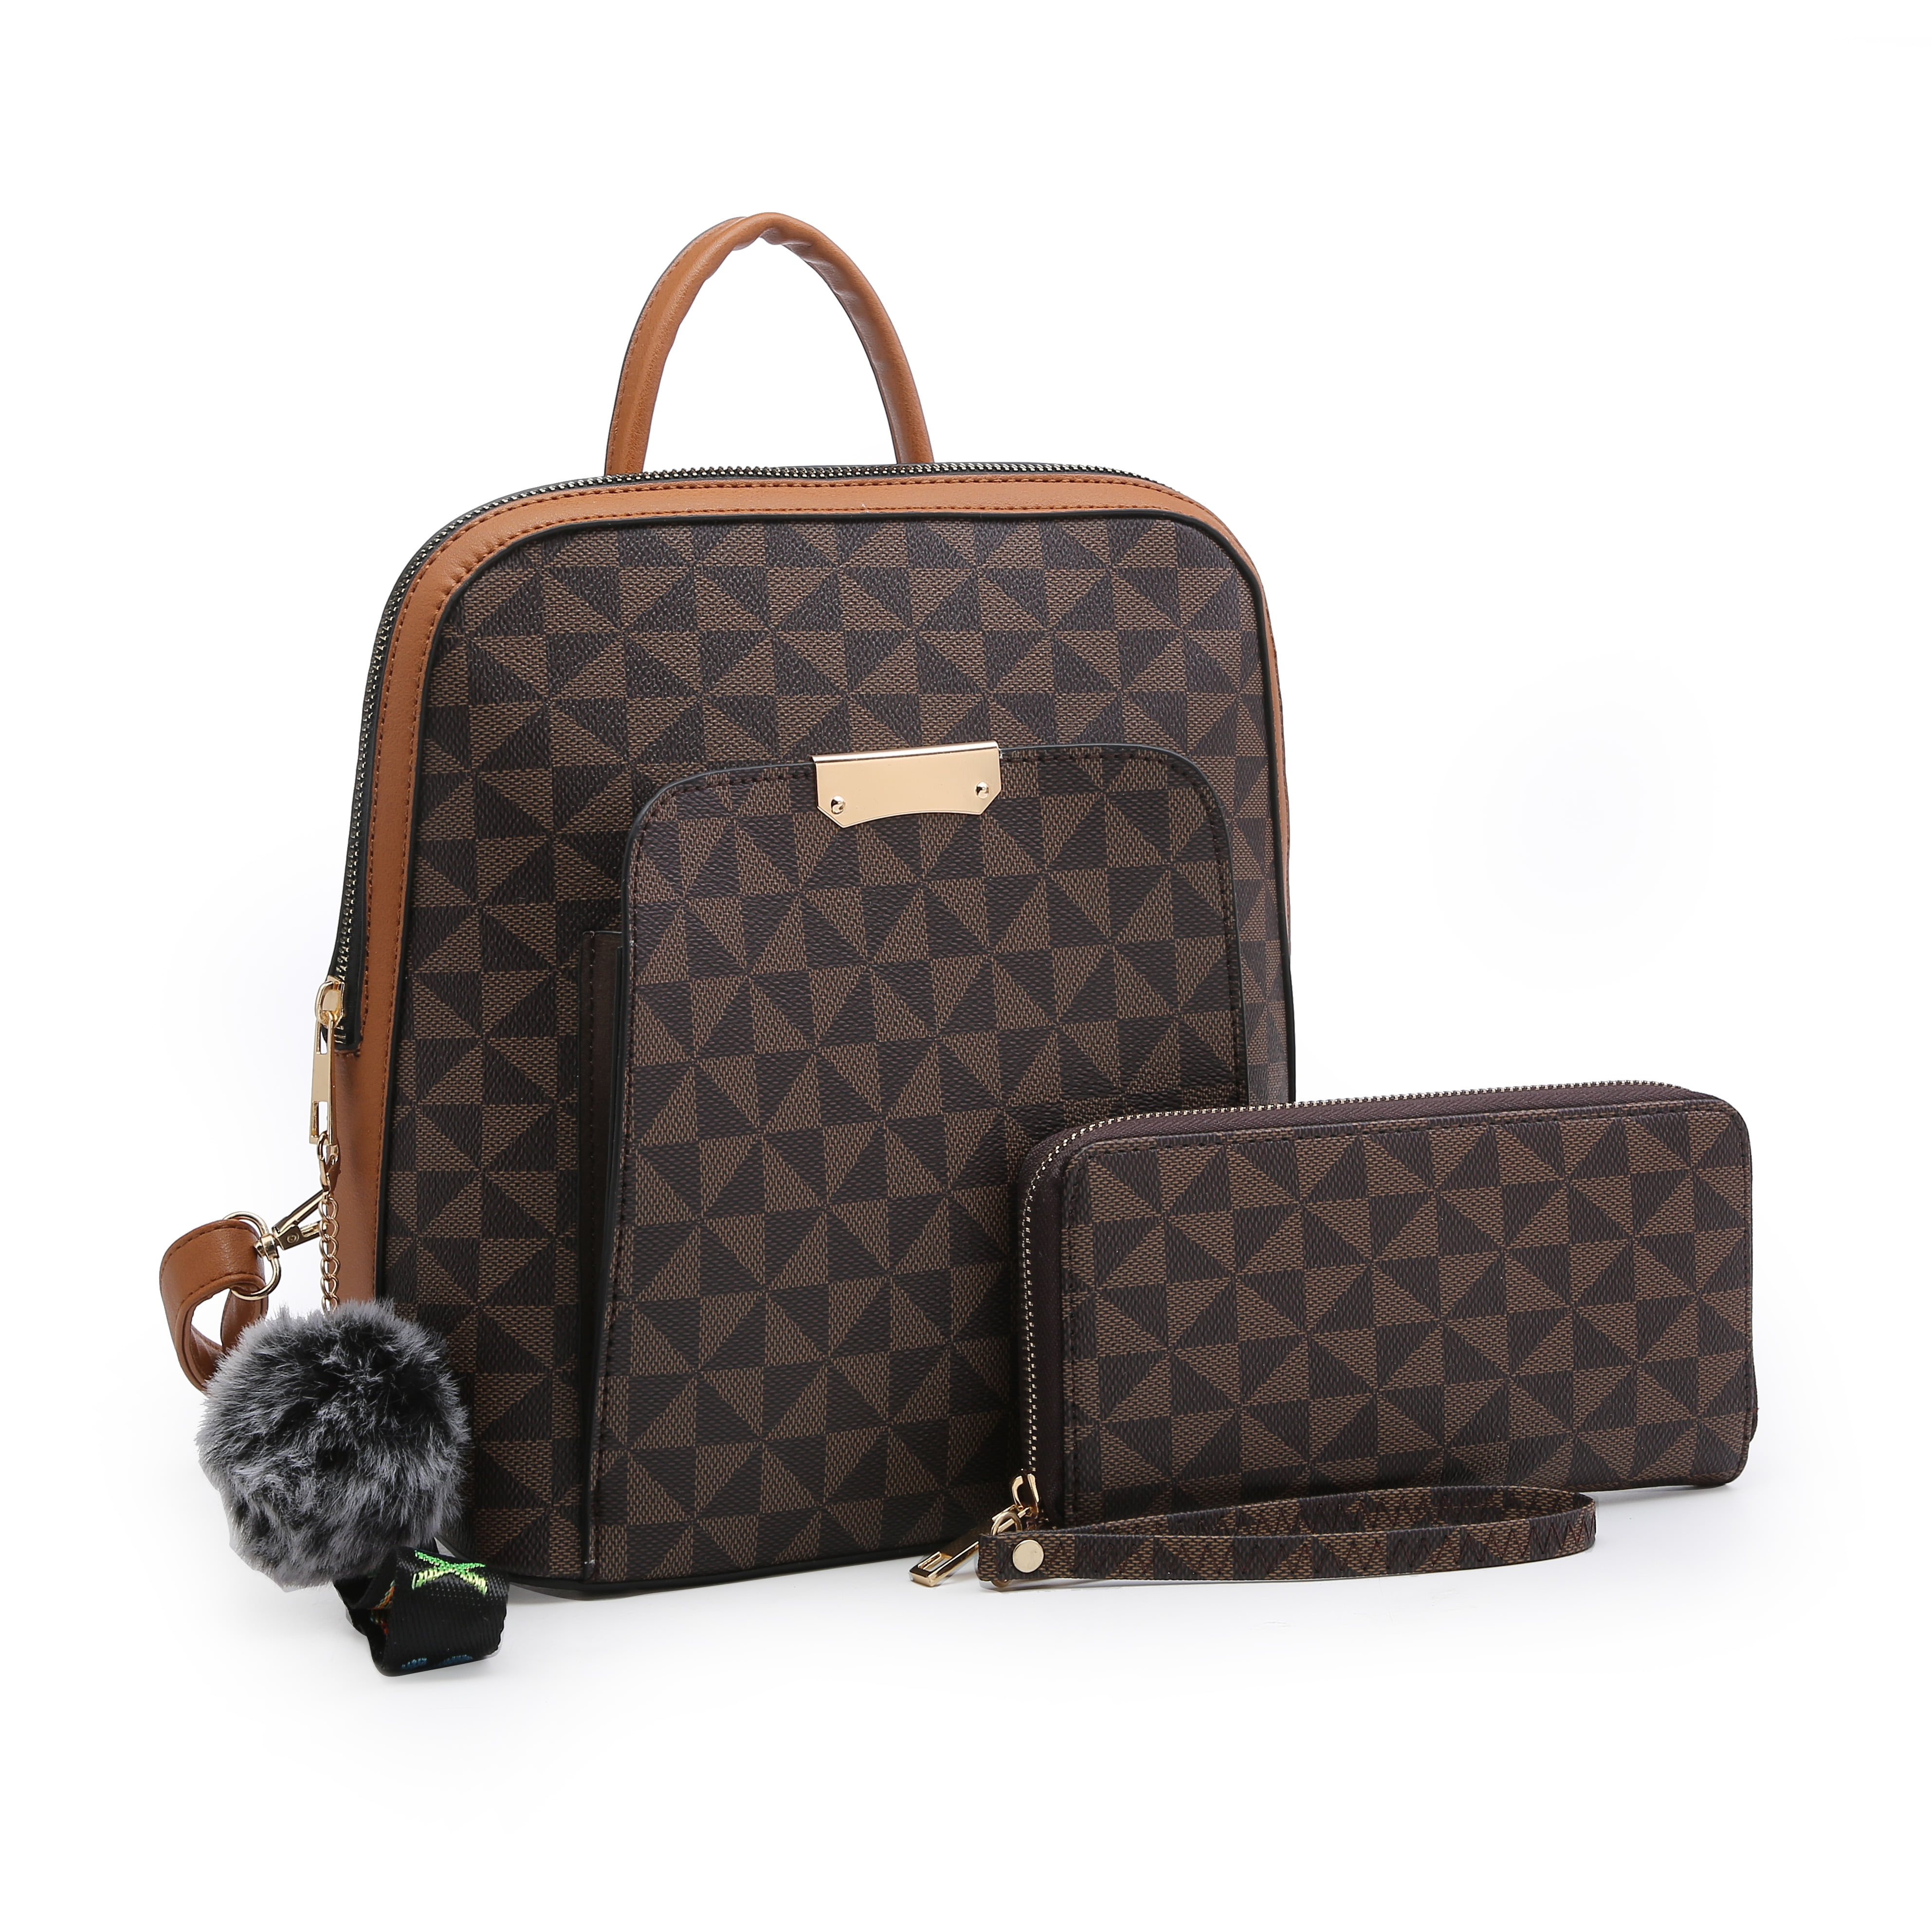 PU Leather Shoulder Bag,Space Dog Backpack,Portable Travel School Rucksack,Satchel with Top Handle